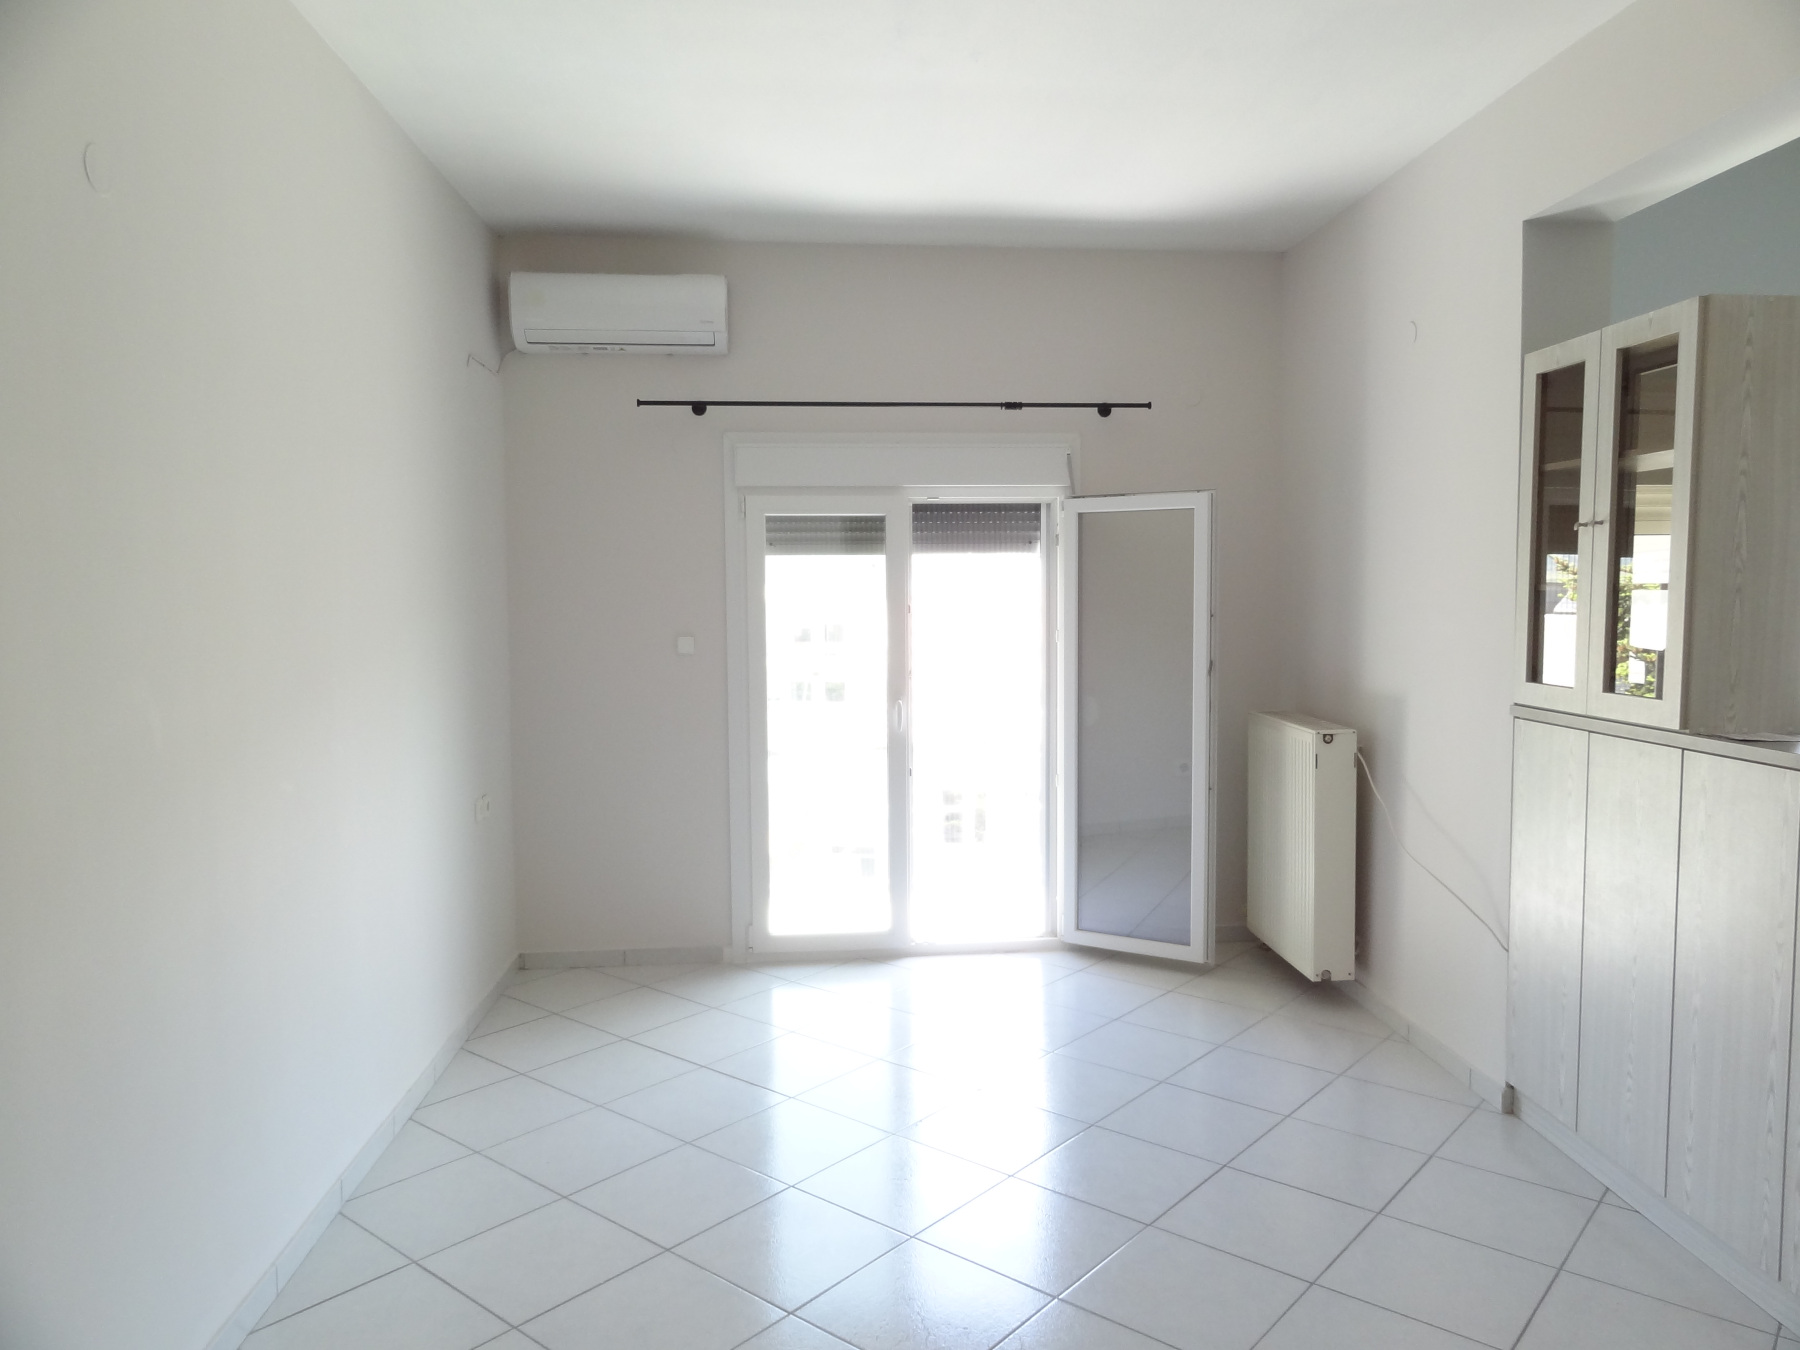 1 bedroom apartment for rent, 54 sq.m. 4th floor near Alsos in Ioannina